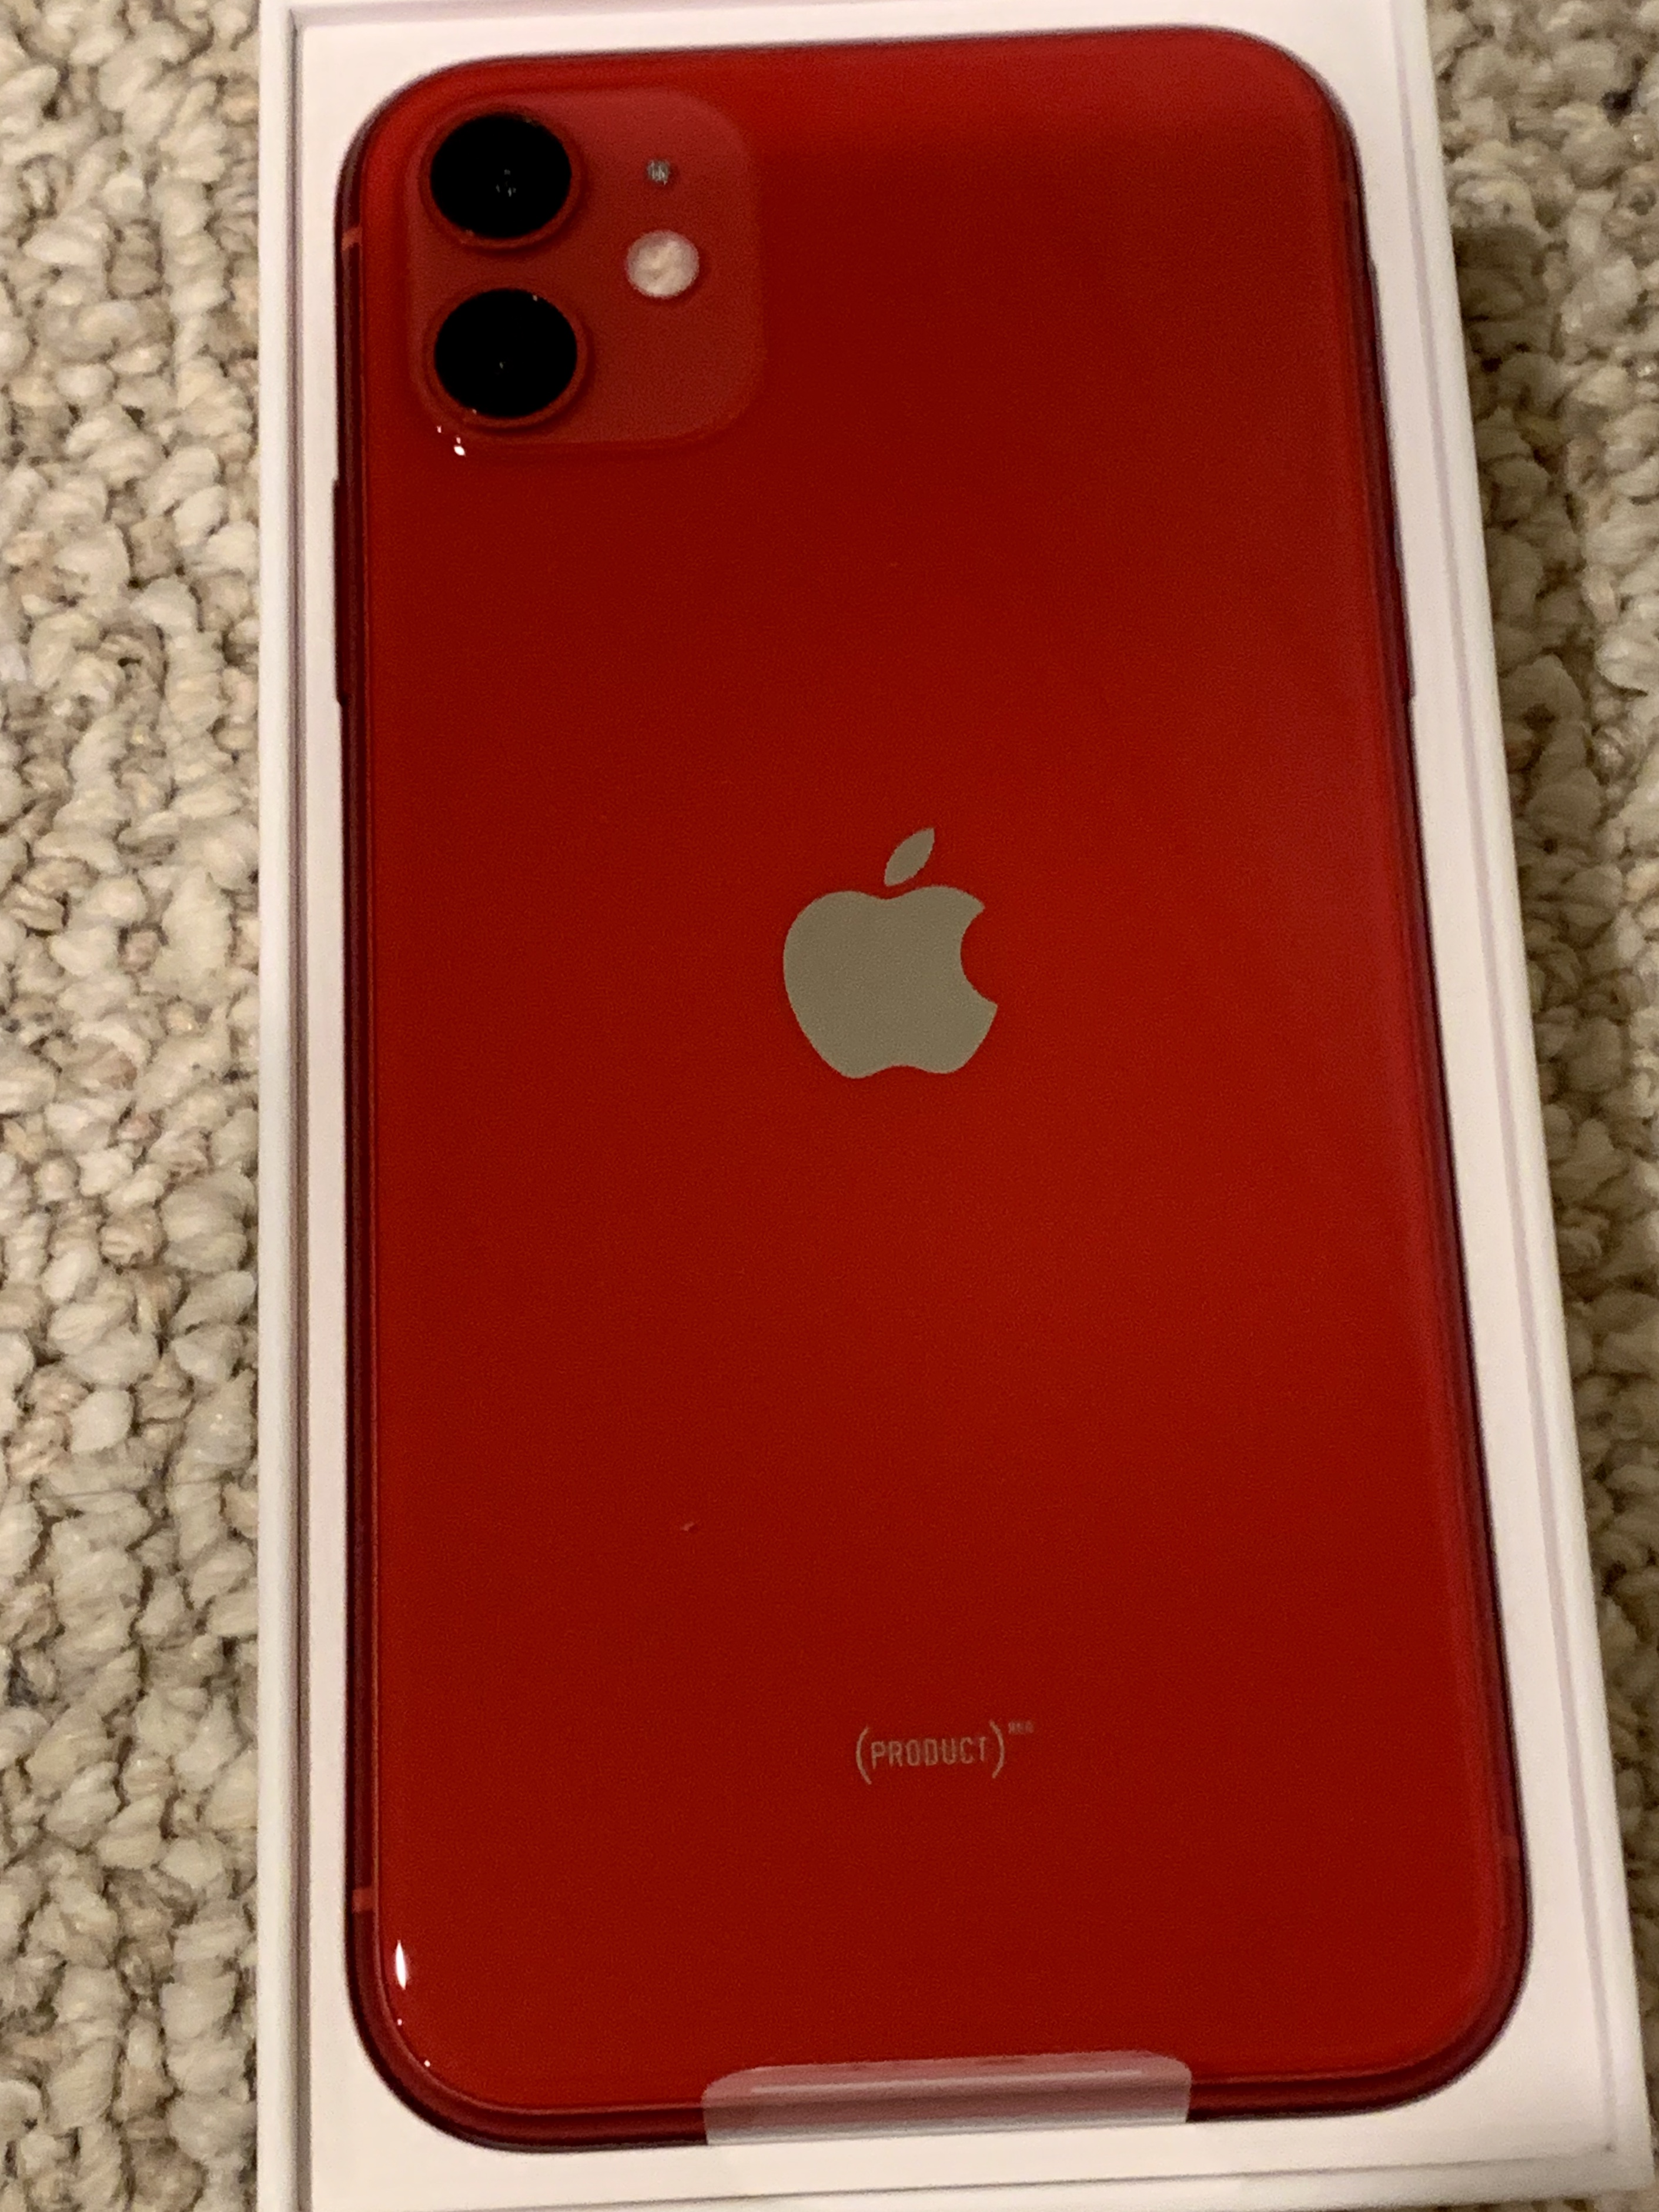 Красный телефон 12. Iphone 11 64gb Red. Айфон 12 Промакс Red. Iphone 11 корпус product Red.